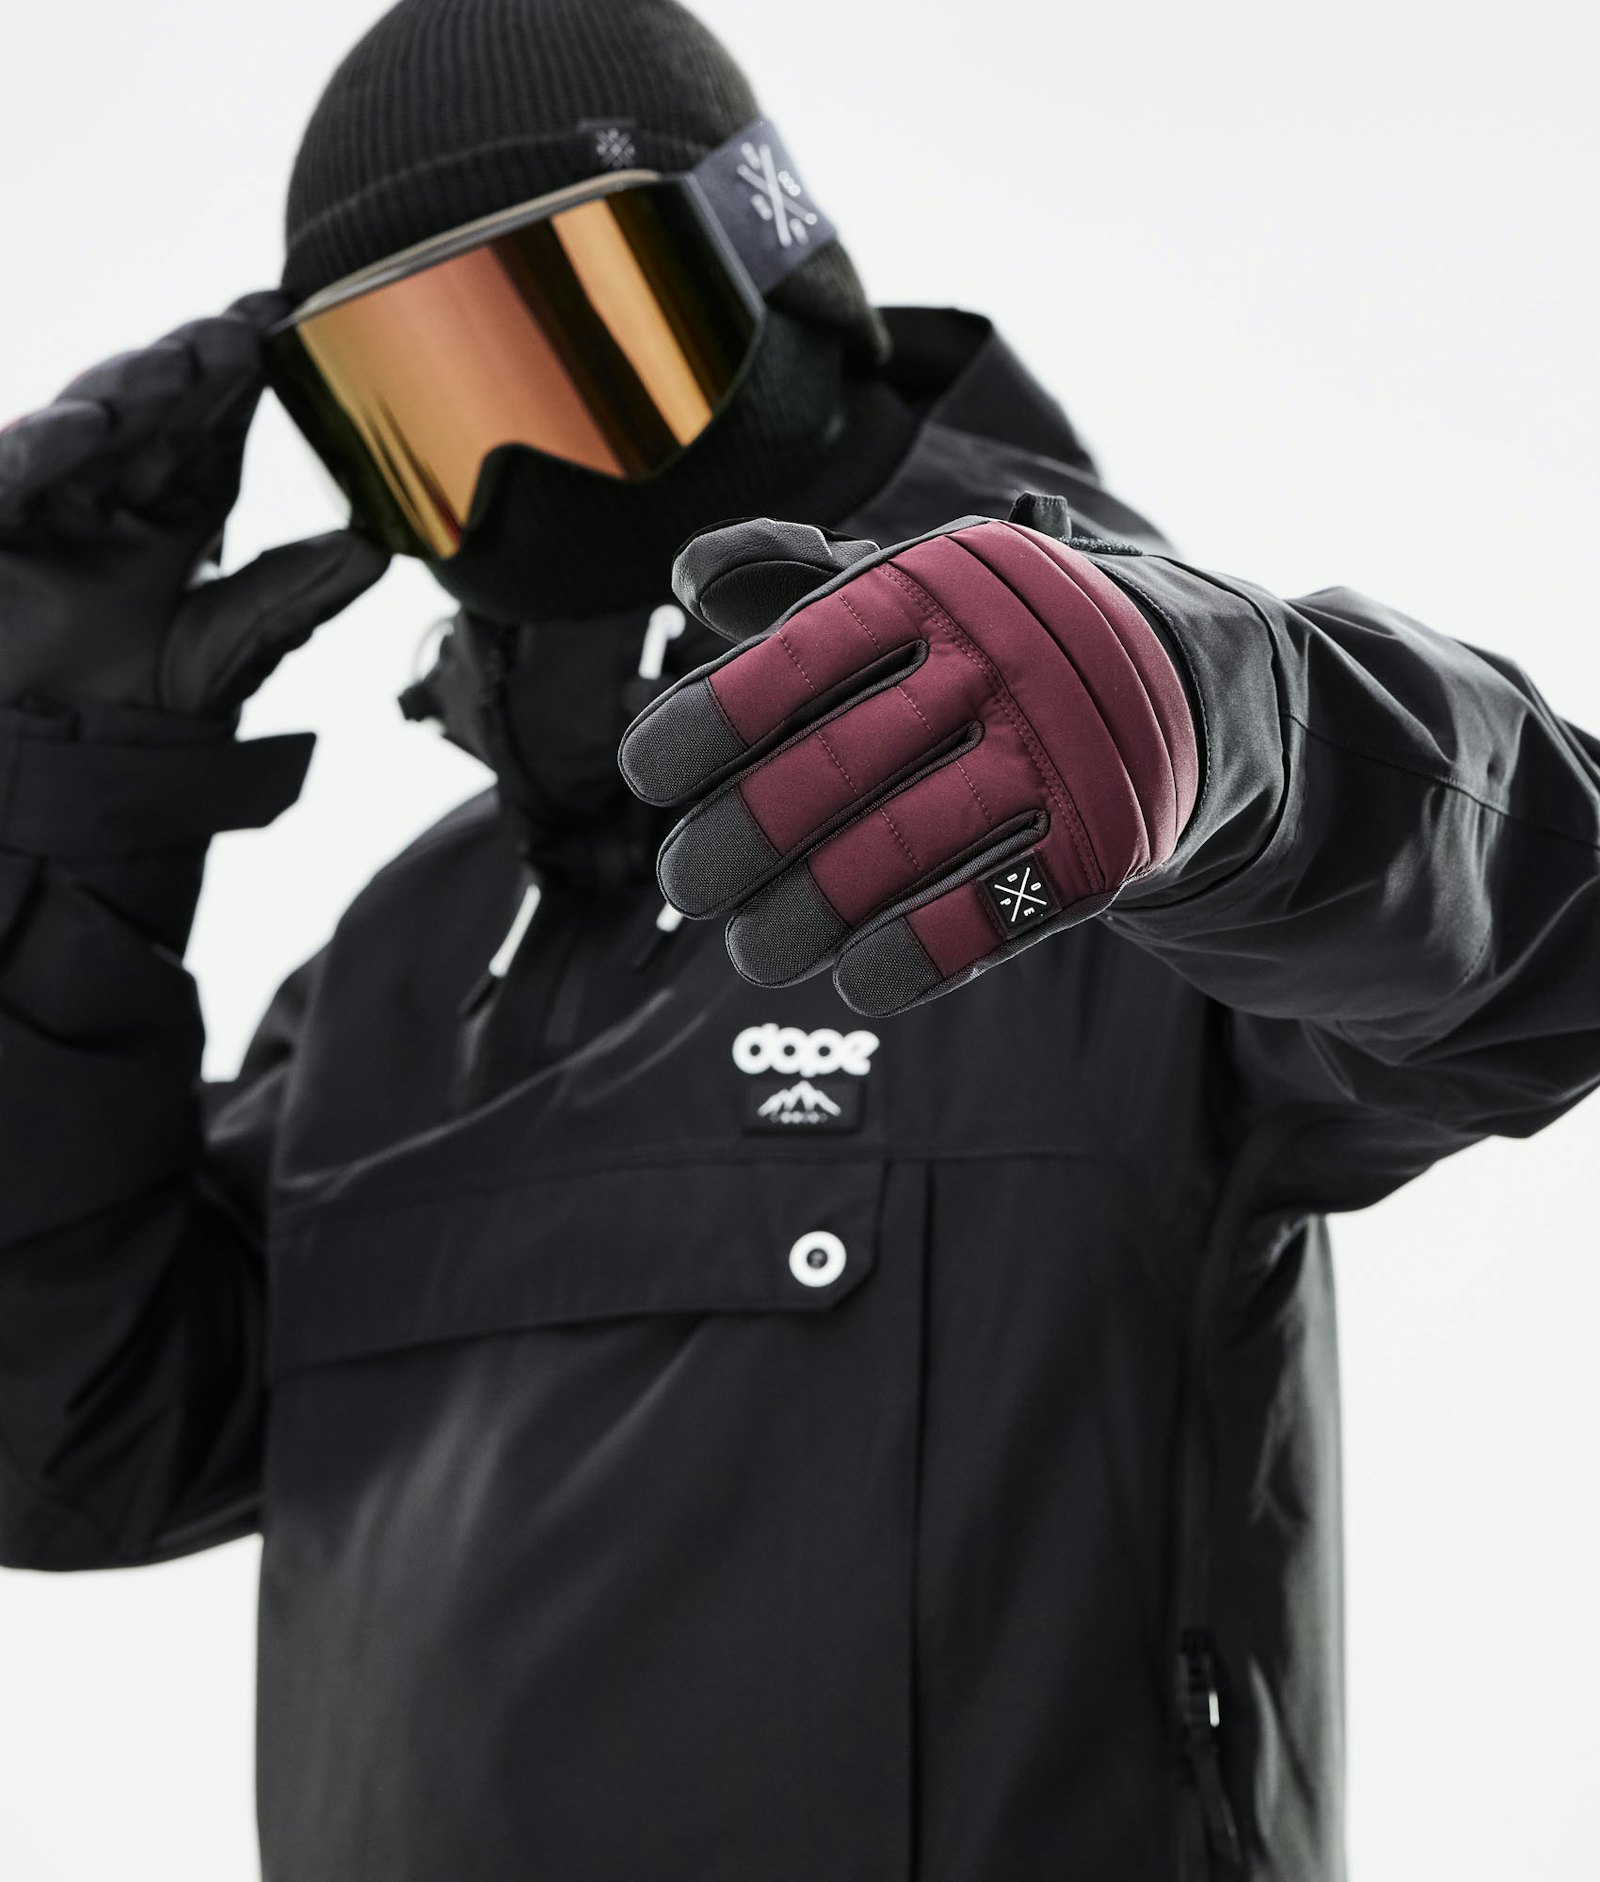 Ace 2021 Ski Gloves Burgundy